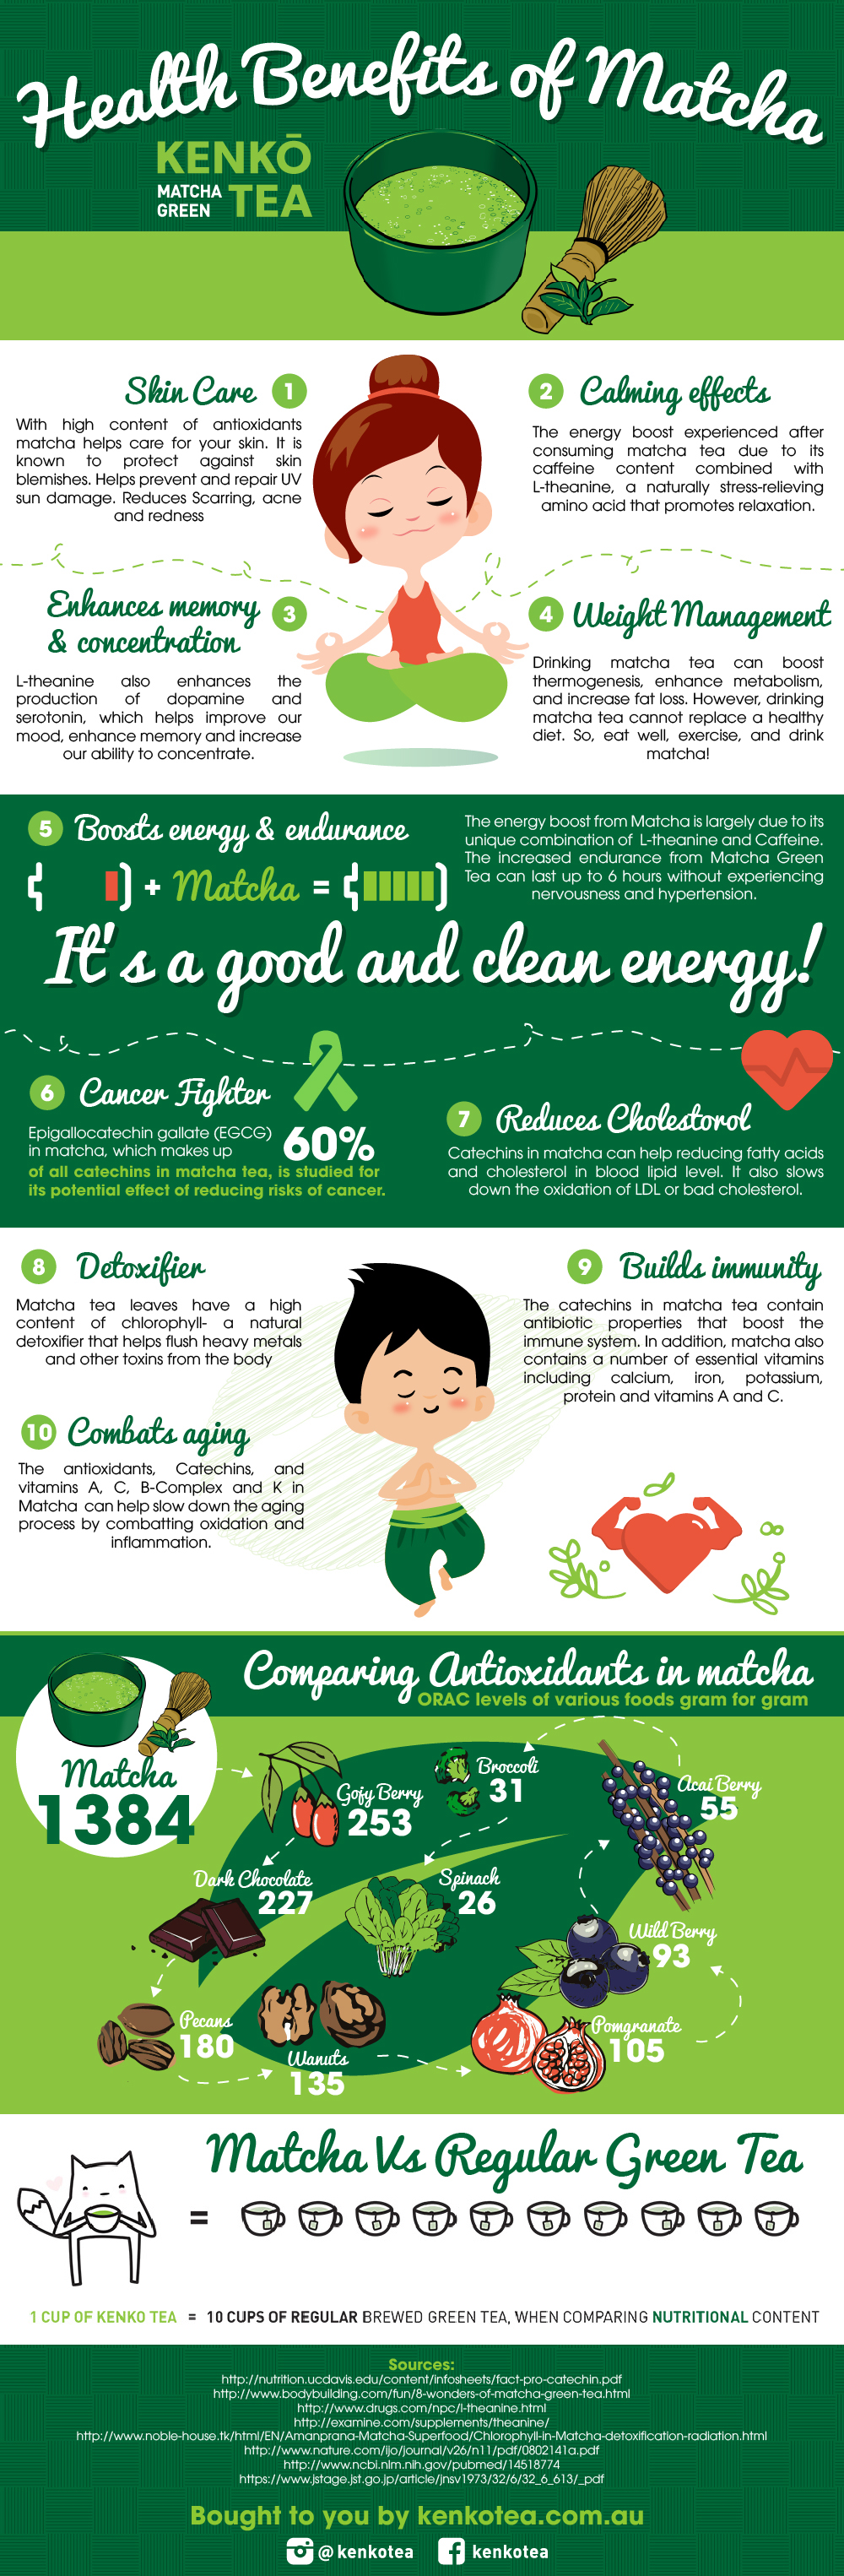 Health Benefits of Matcha Green Tea by Kenko Tea